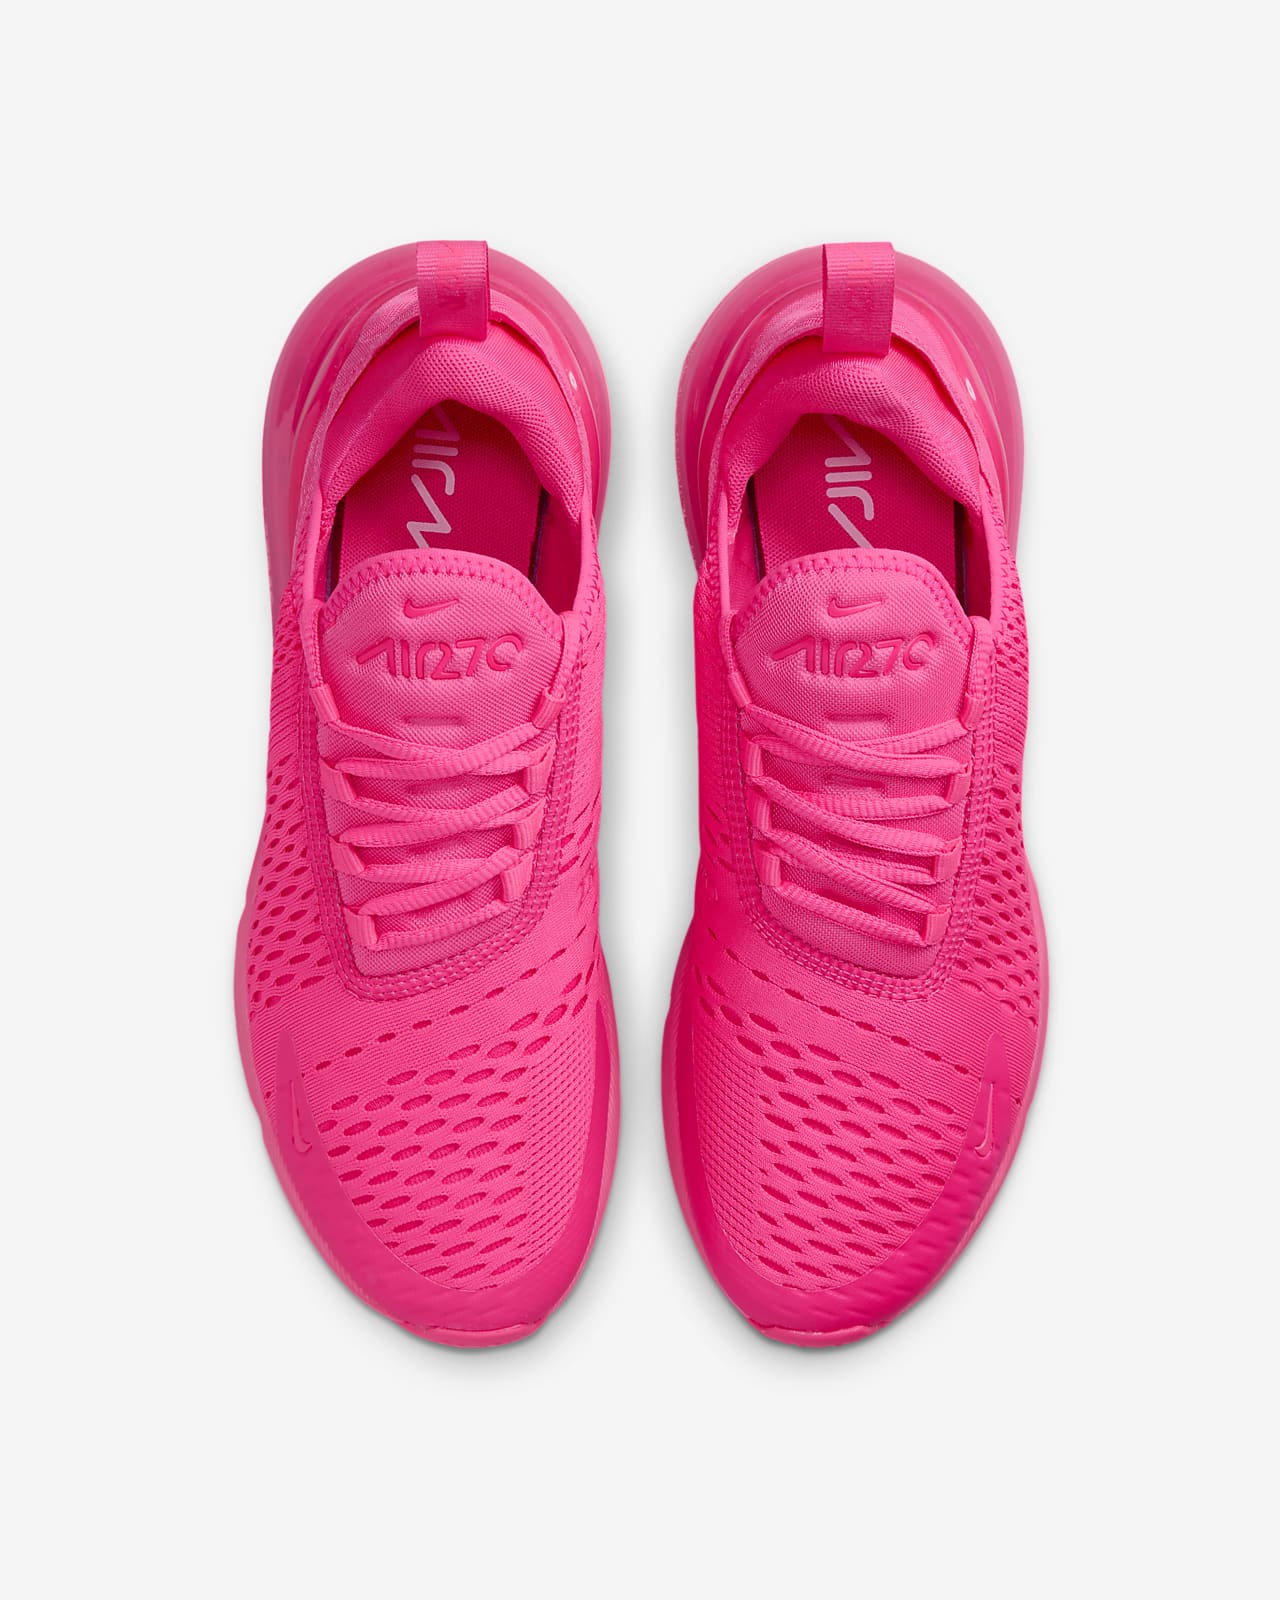 Nike Women's Air Max 270 Soft Pink